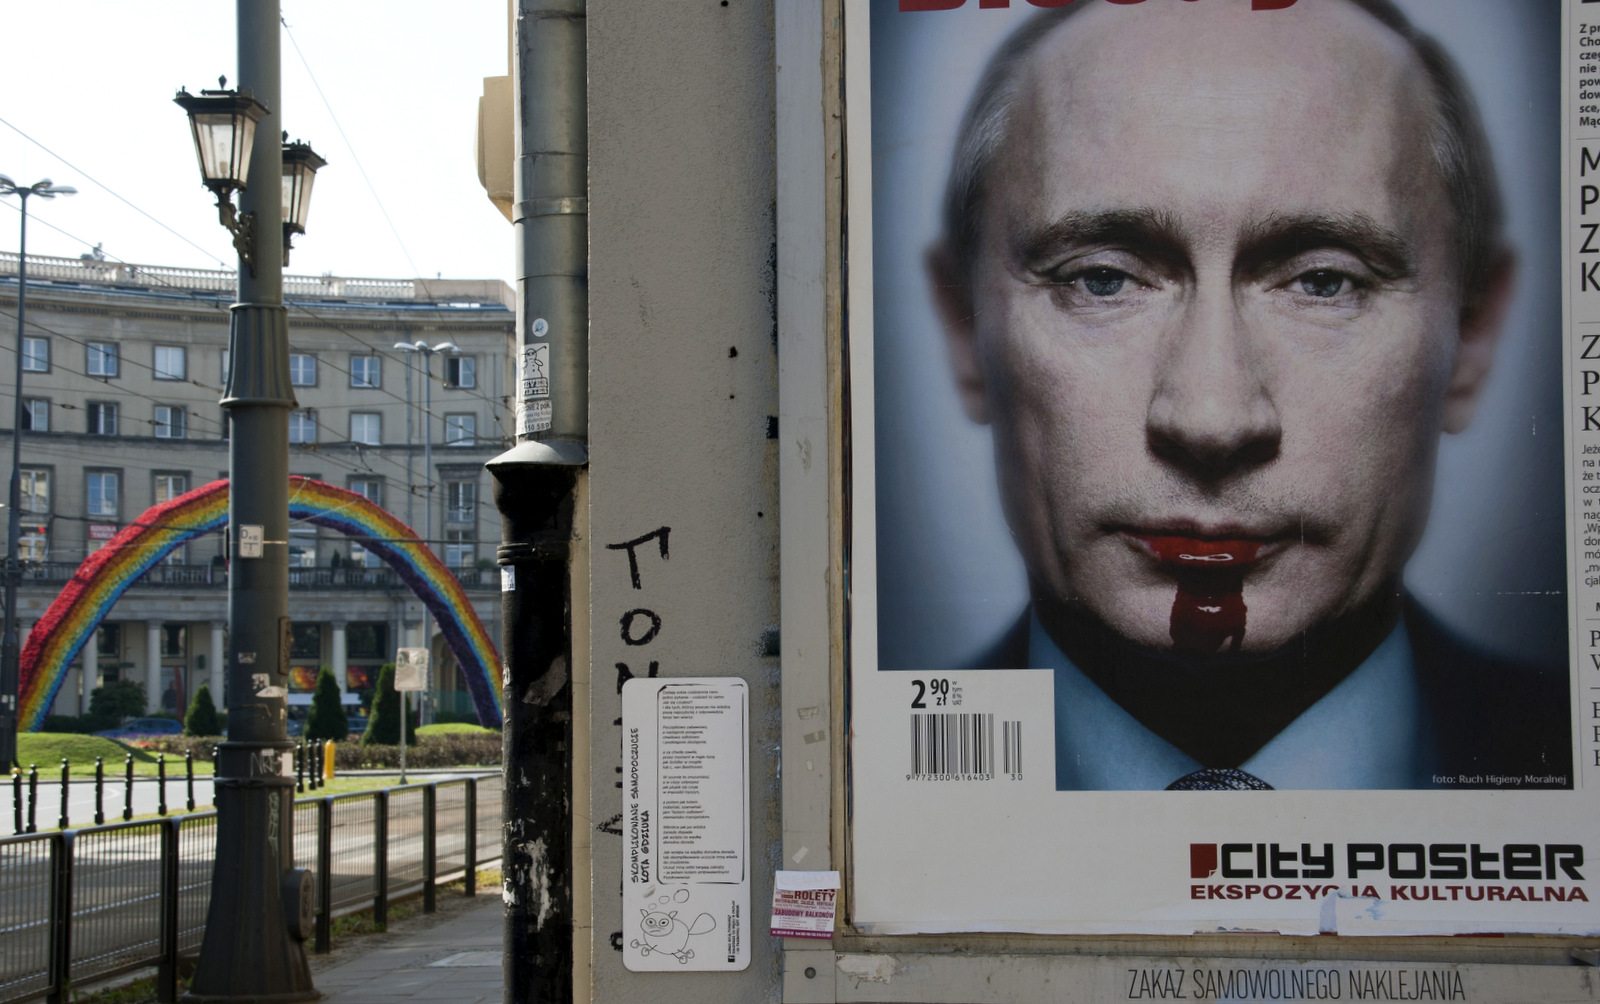 Street art in Warsaw, Poland depicting Russian President Vladimir Putin. (Photo: Alberto Cabello/Flickr CC)